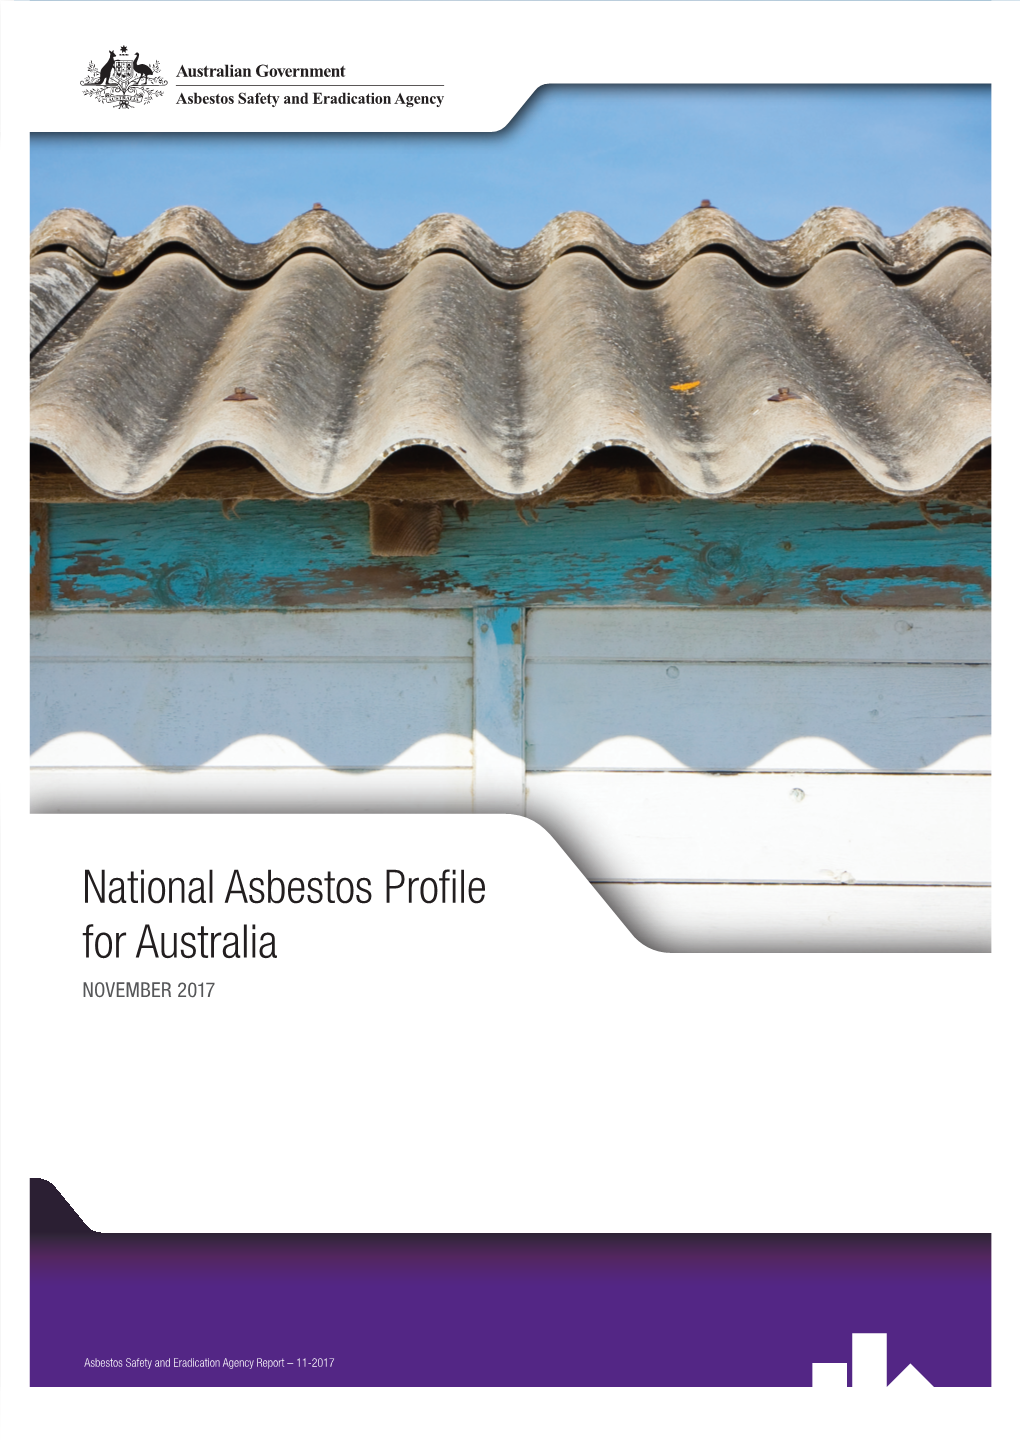 National Asbestos Profile for Australia NOVEMBER 2017